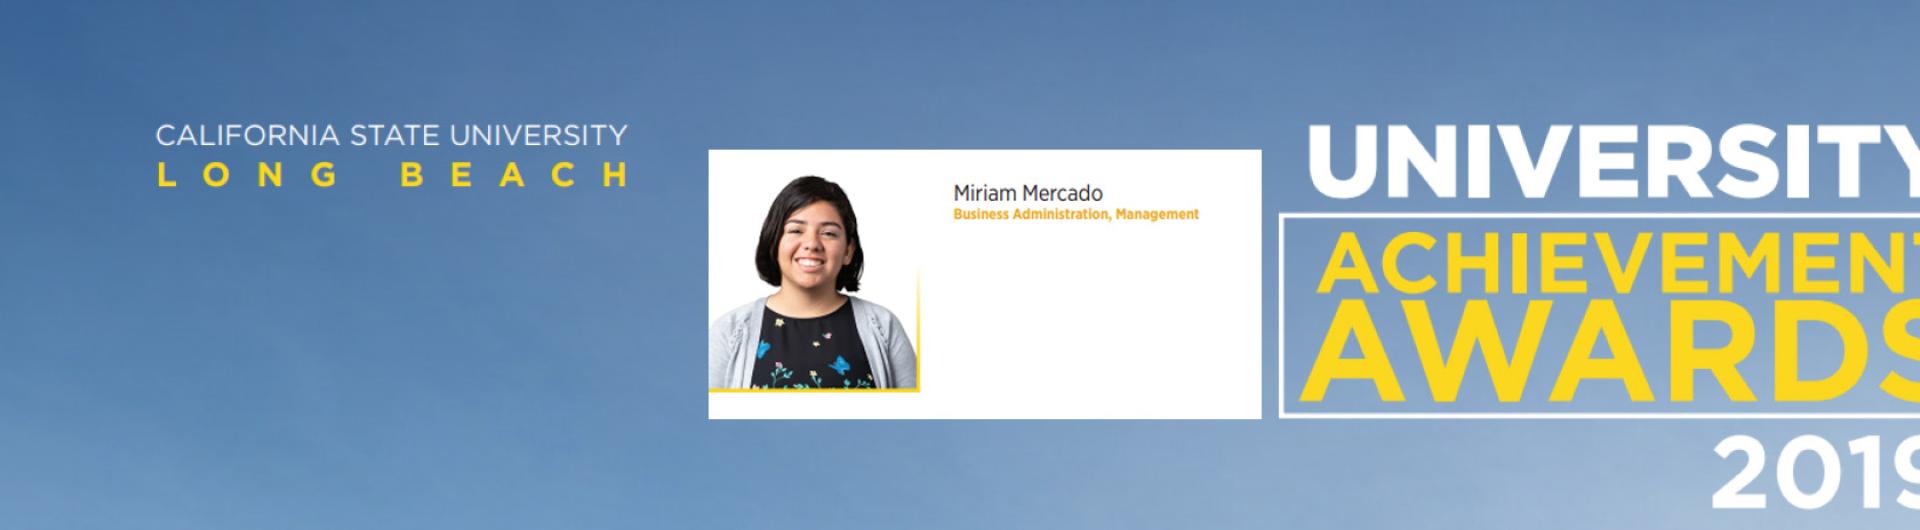 Miriam Mercado Award winner 2019 Community Service